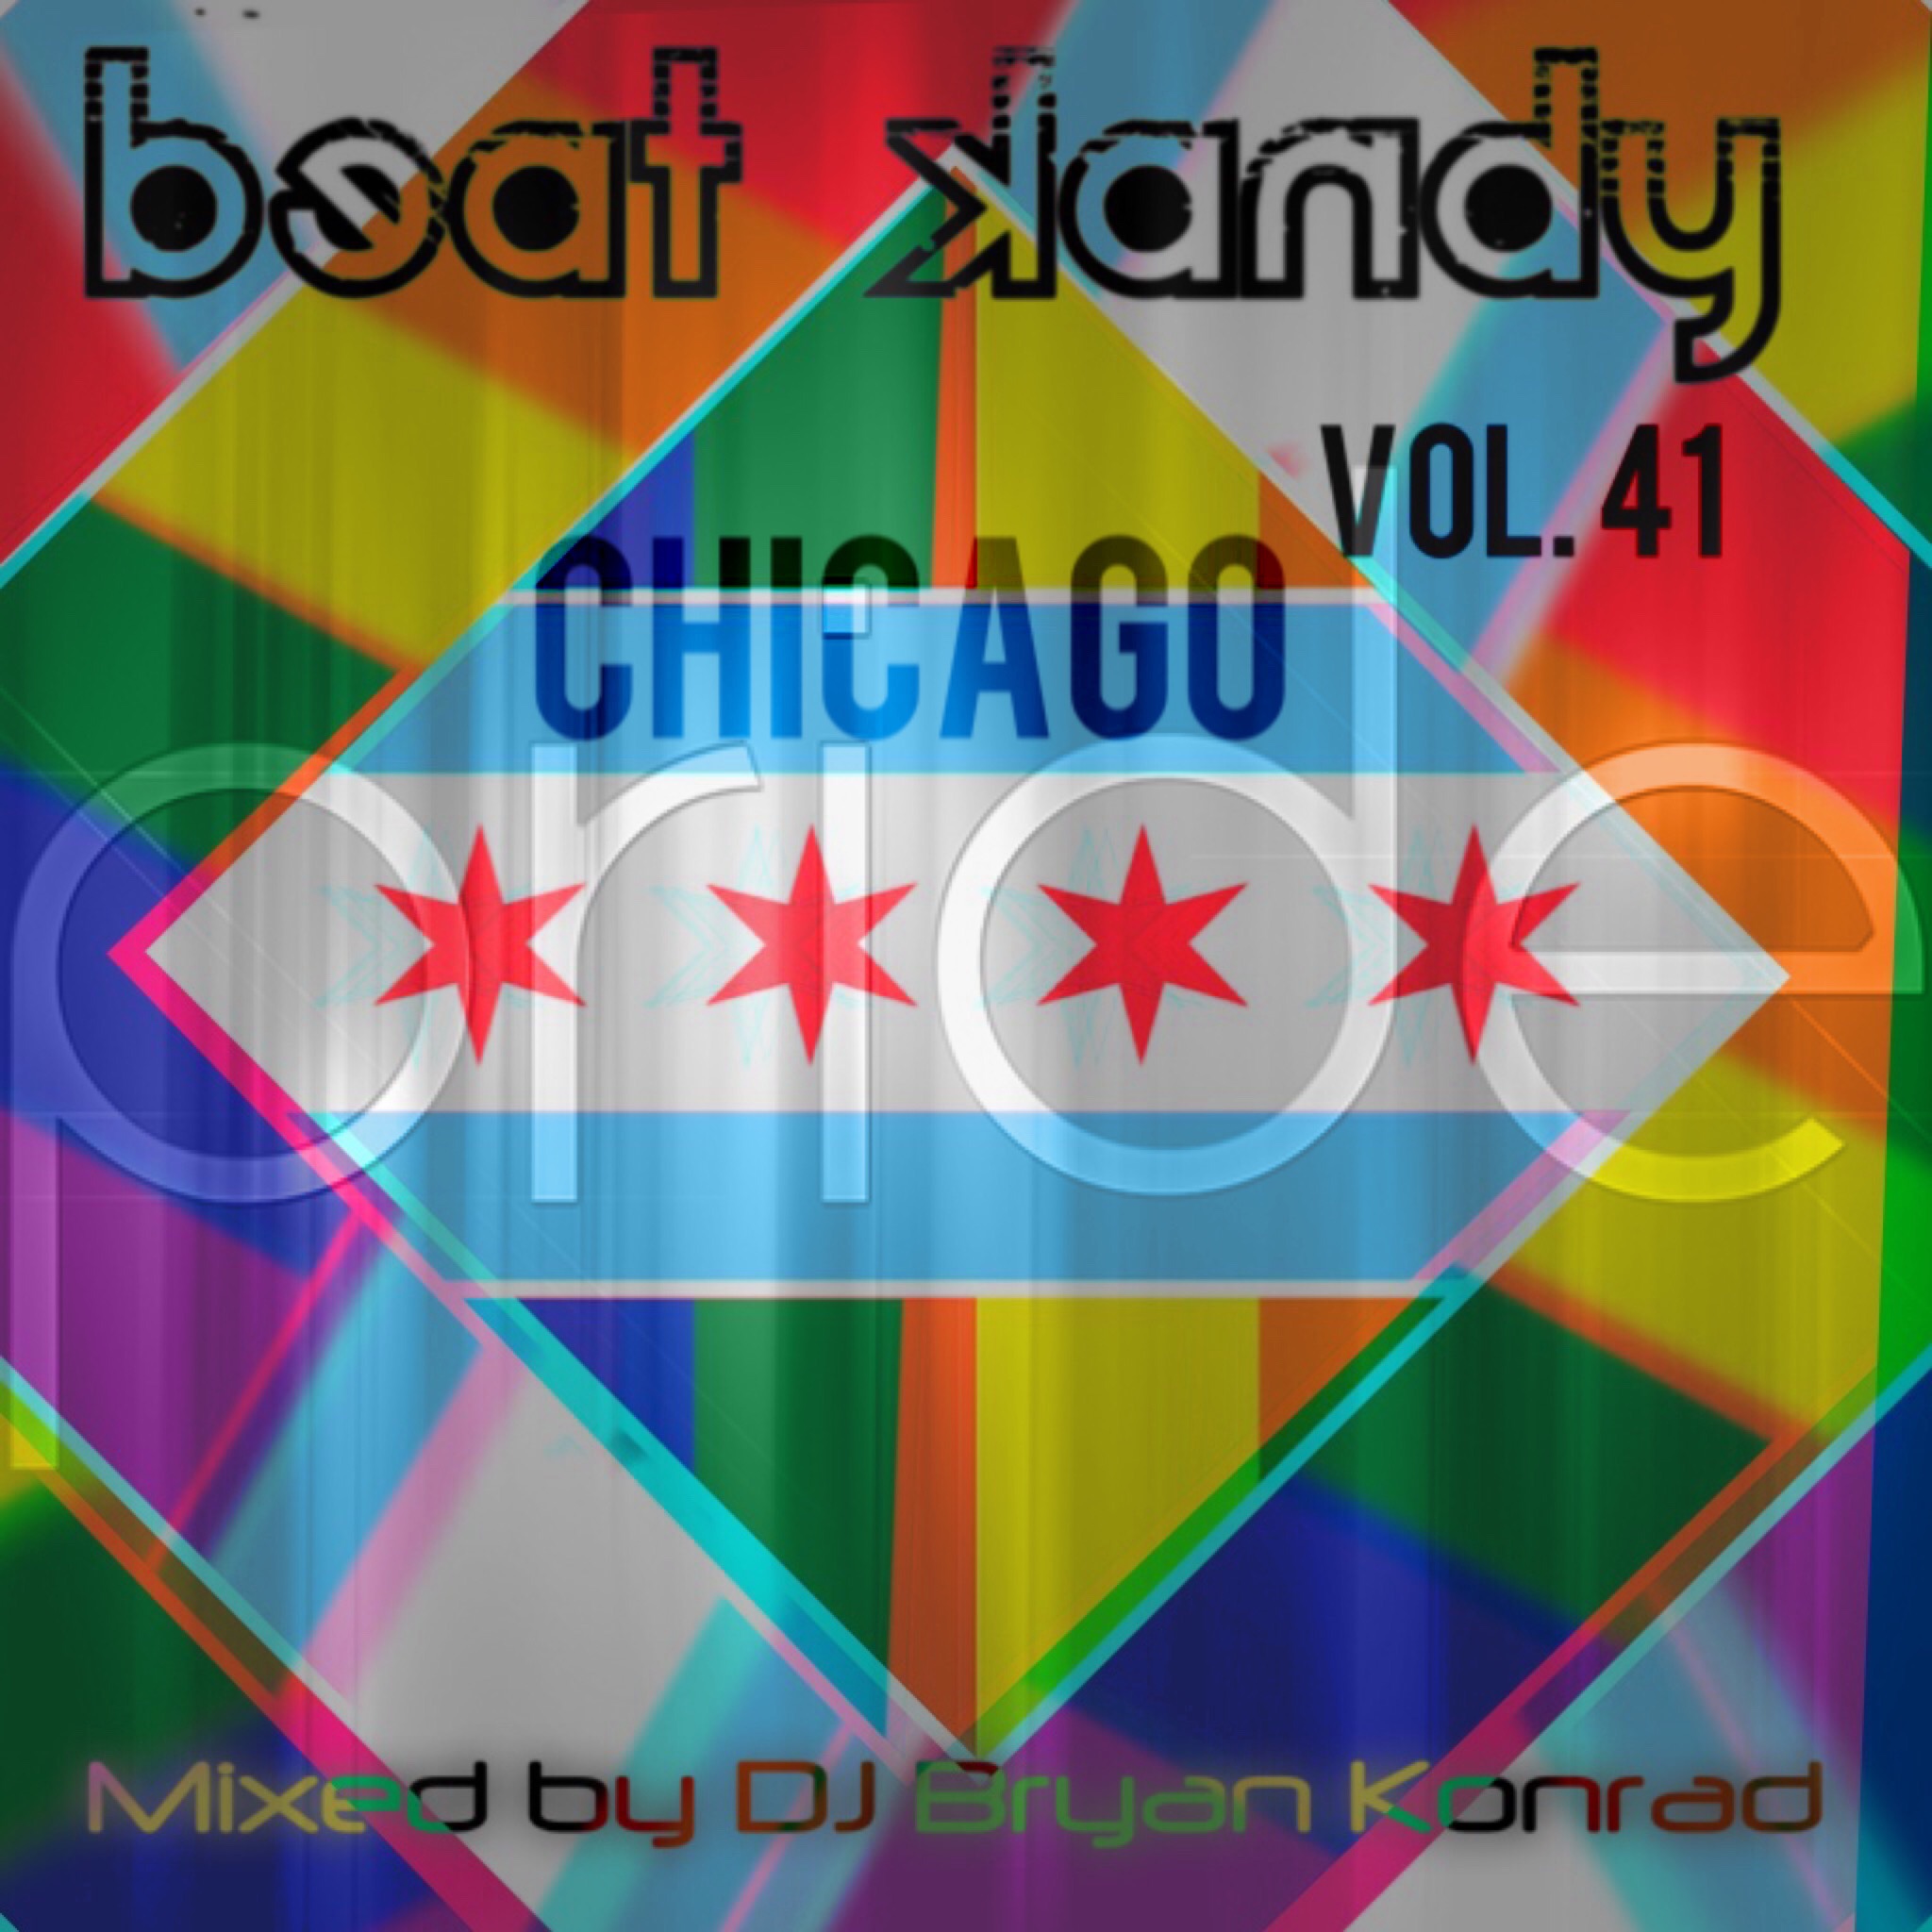 Beat Kandy Vol. 41 [Part 2] (Pride 2017)